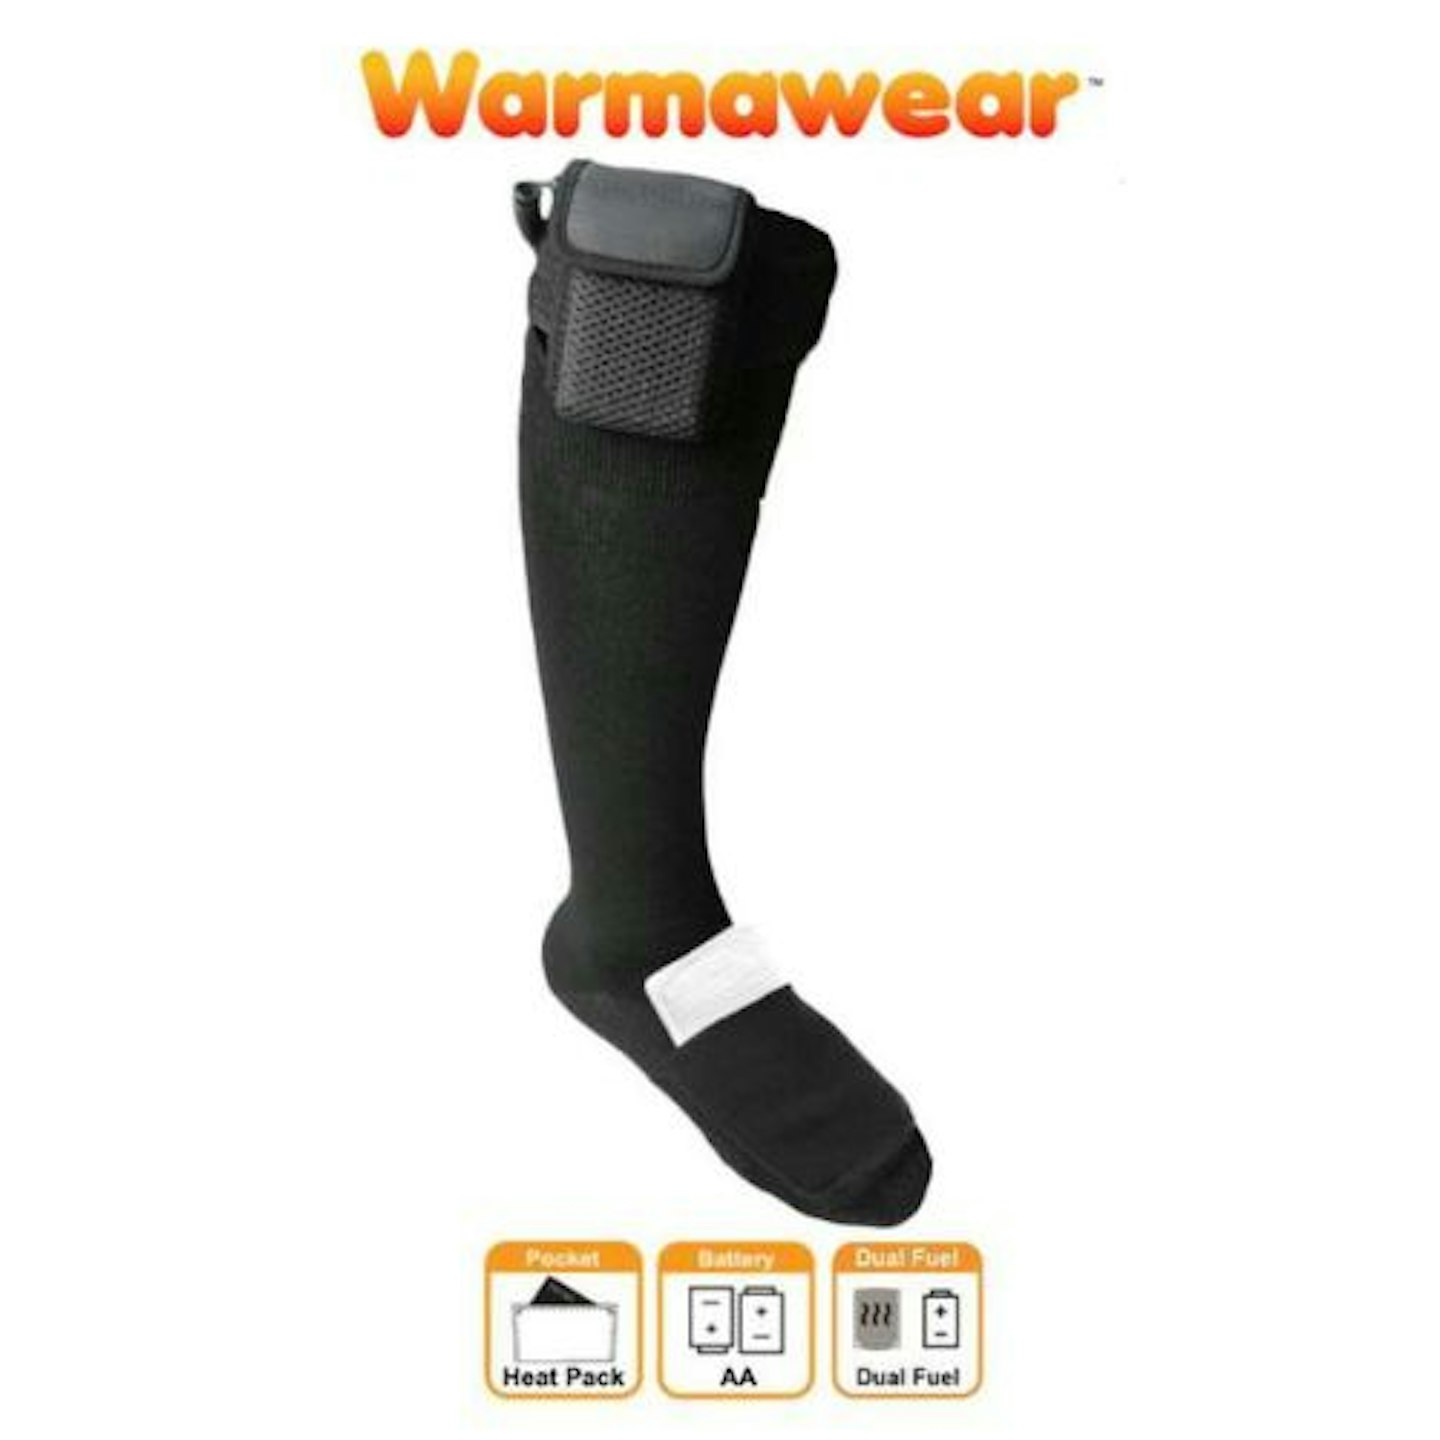 Warmawear Battery Heated Socks with Dual Fuel Pocket